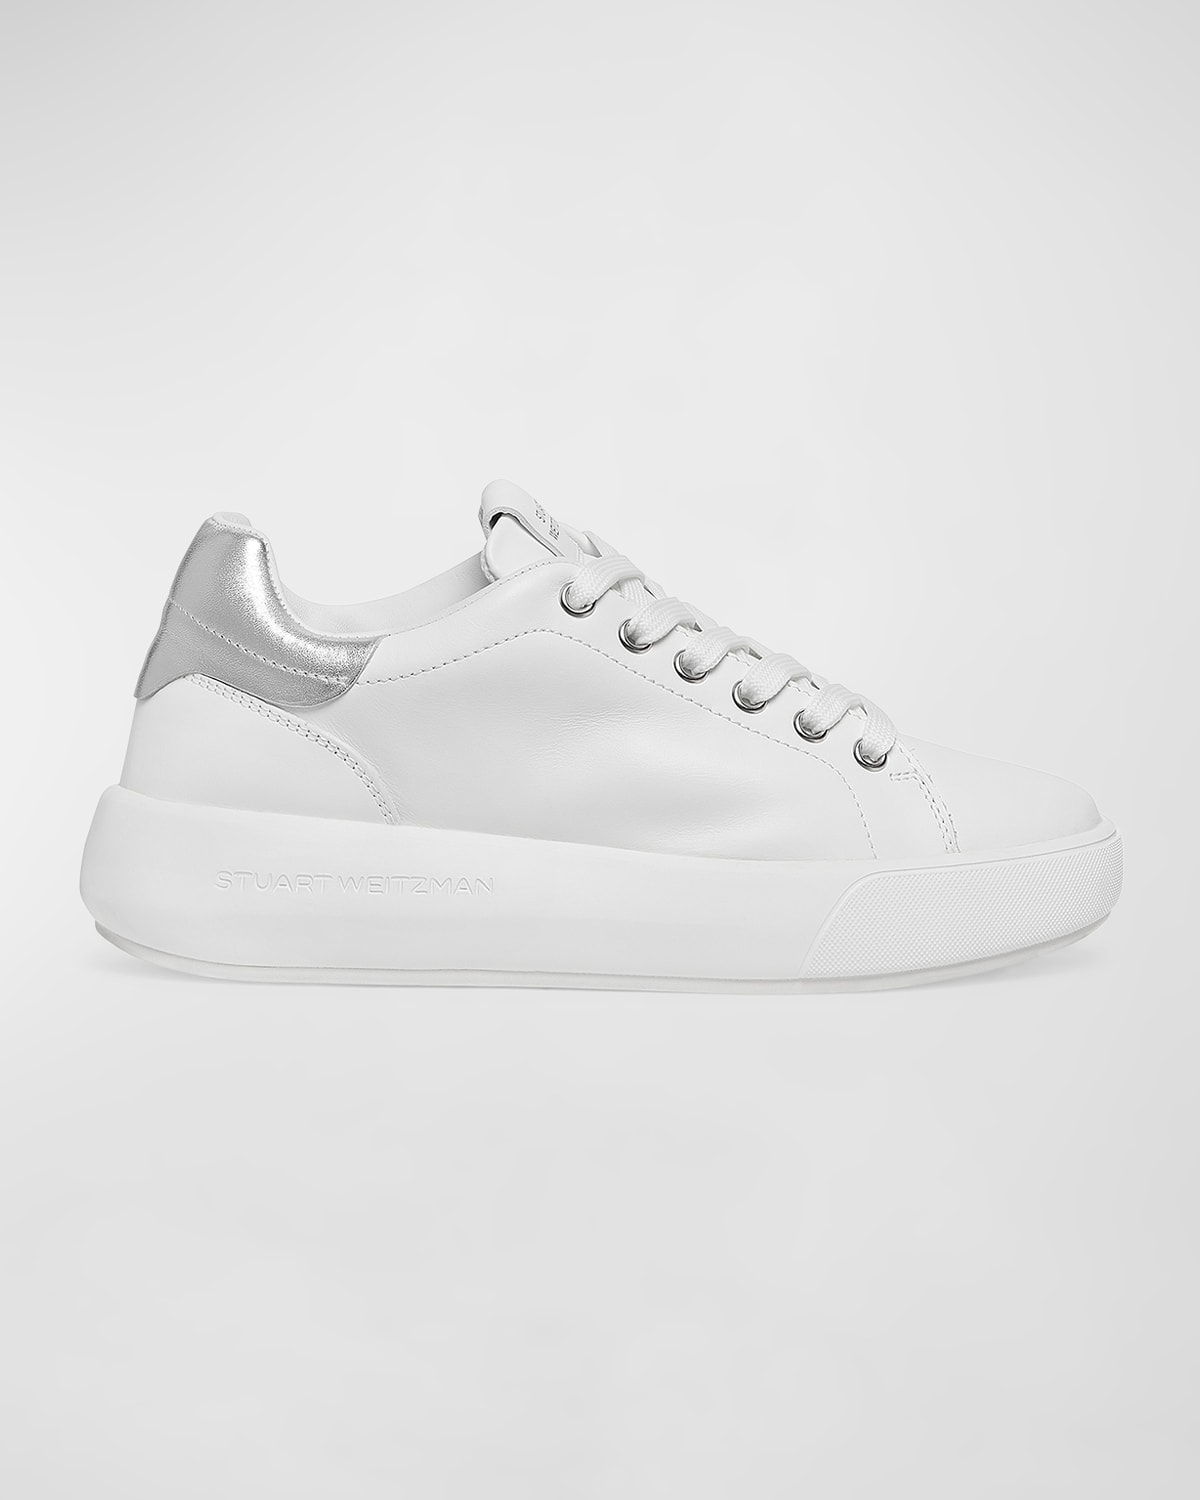 Stuart Weitzman Pro Sleek Leather Sneakers In White/silver